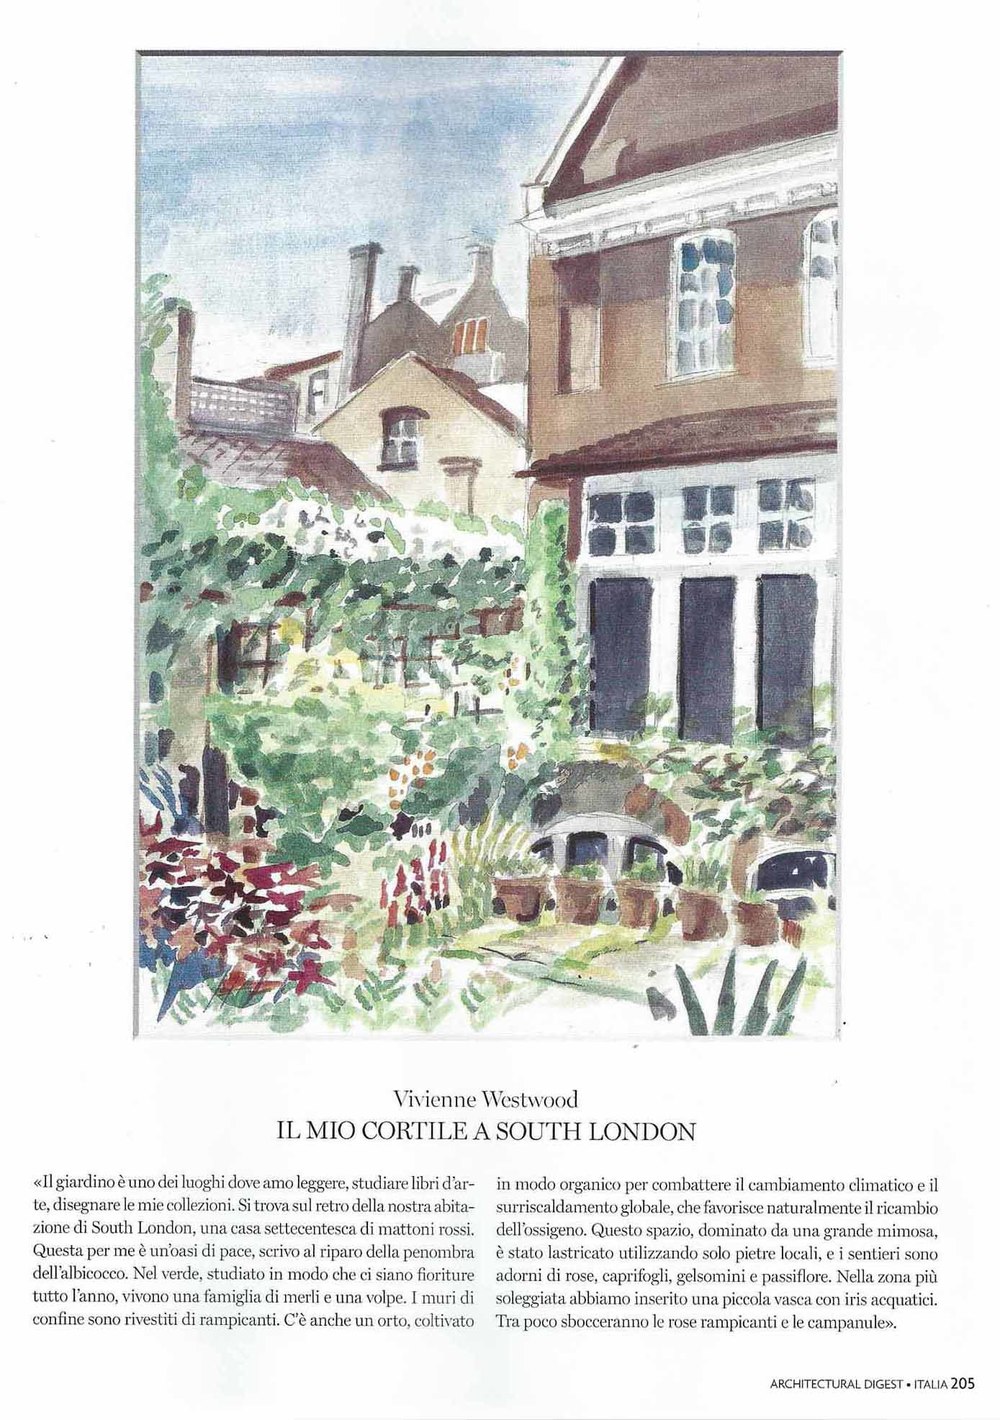 Vivienne Westwood - South London Garden